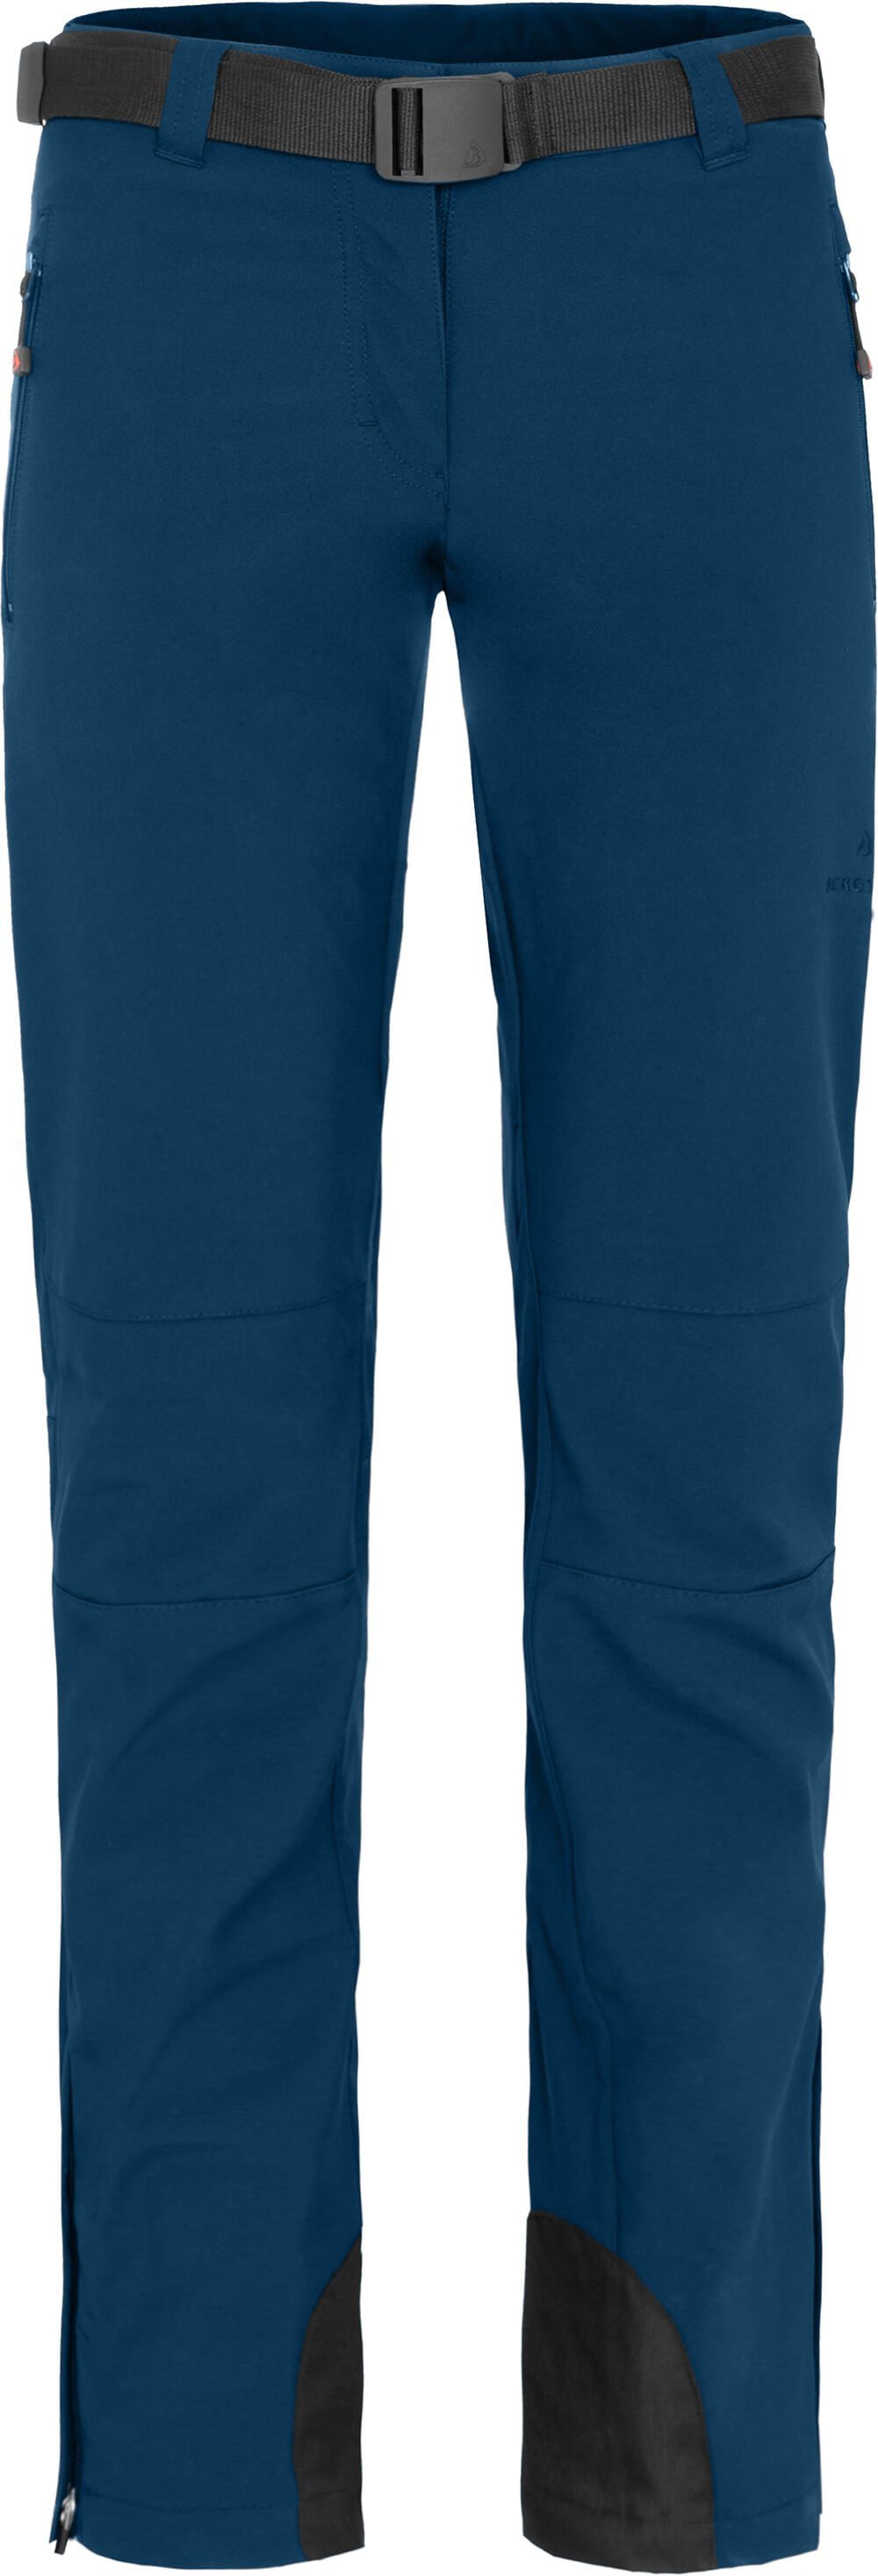 Bergson Outdoorhose MAILA Damen Winter Softshellhose, blau winddicht, warm, Normalgrößen, poseidon